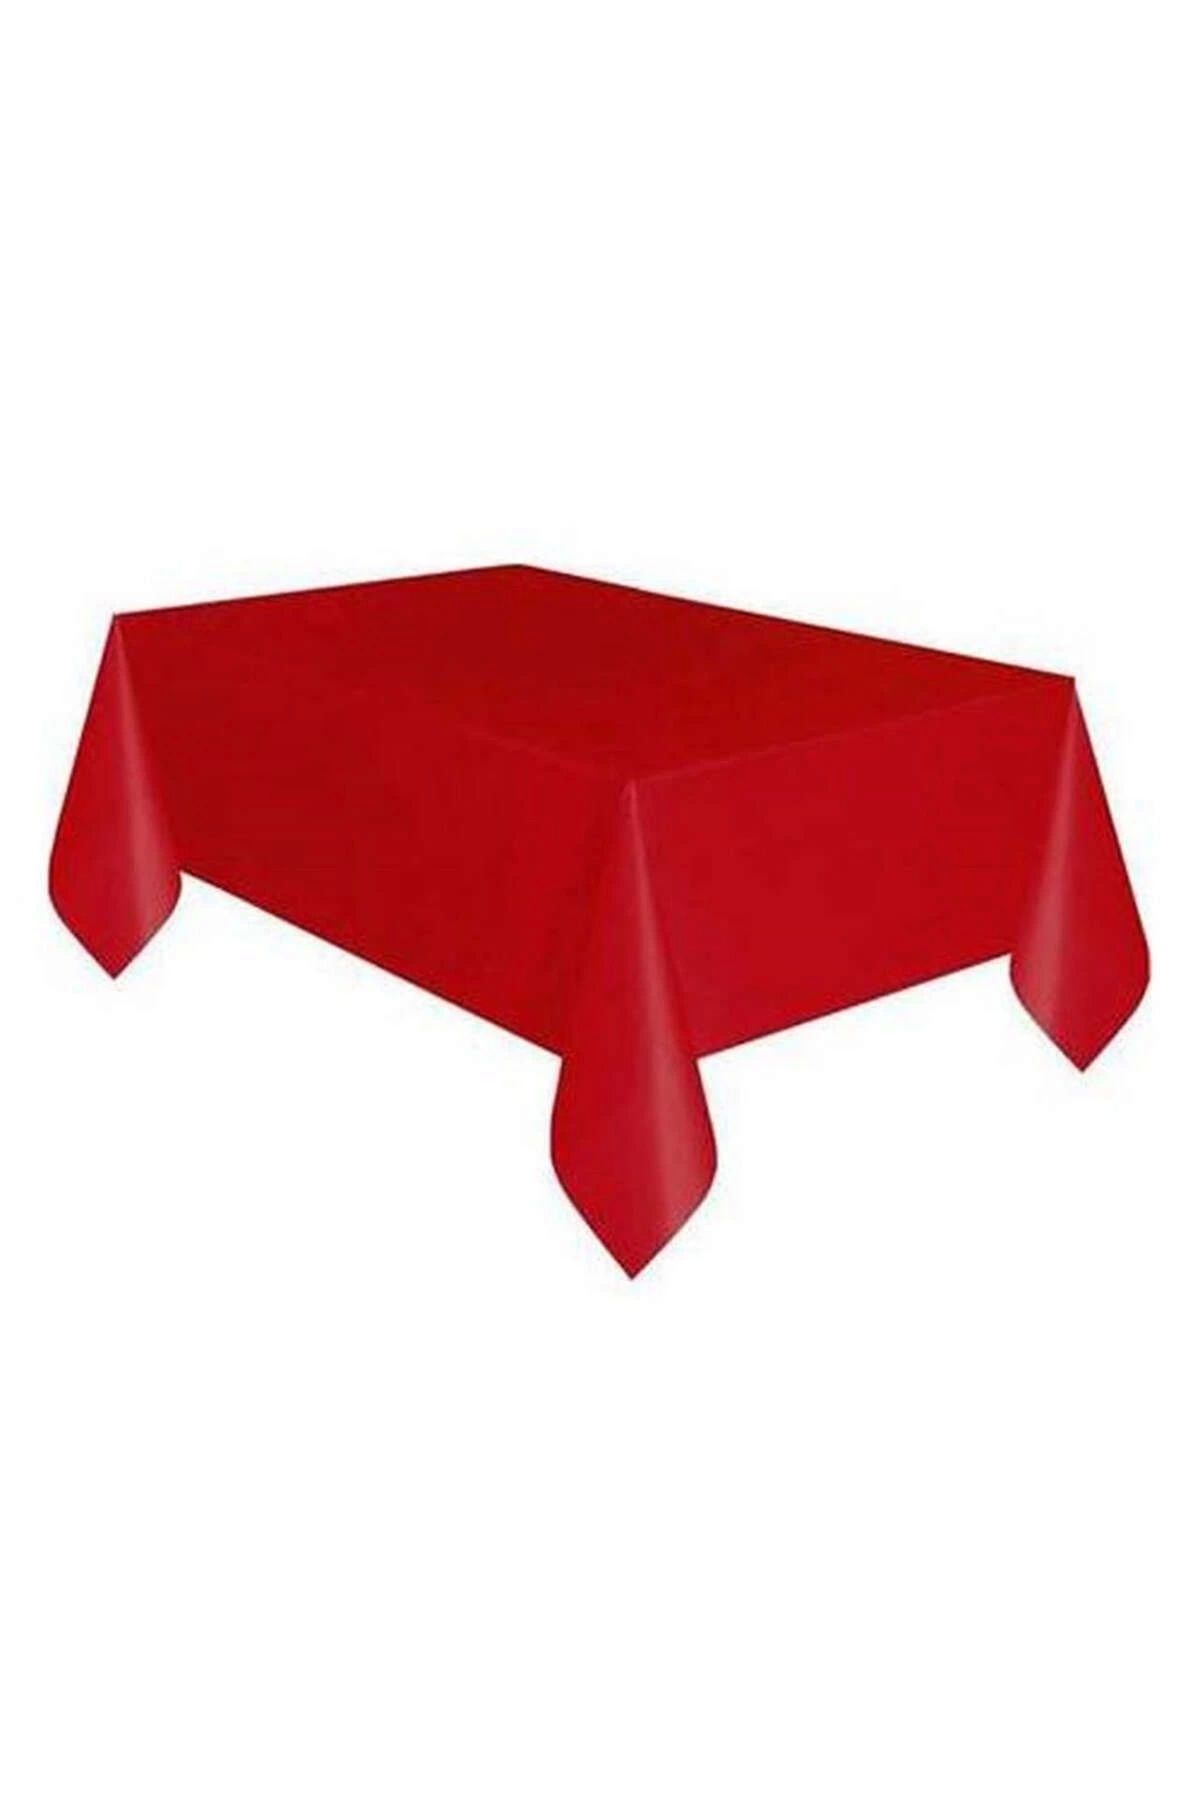 Genel Markalar - 120x180 cm Plastik Masa Örtüsü Kırmızı 349109